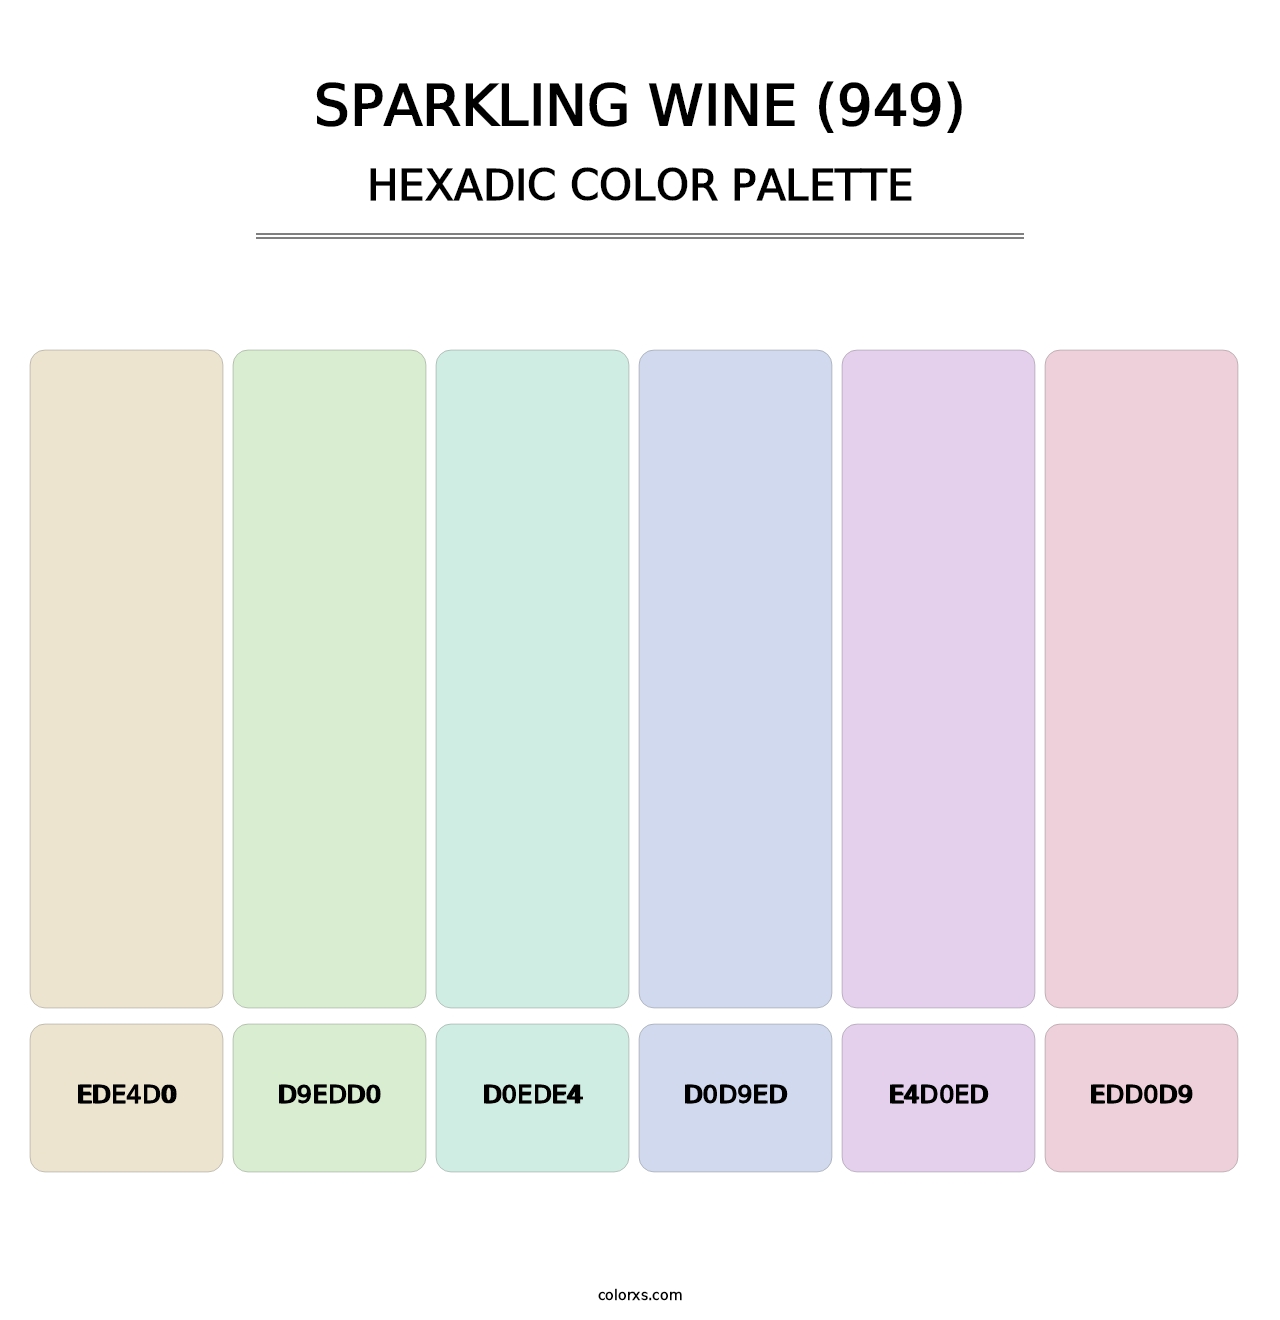 Sparkling Wine (949) - Hexadic Color Palette